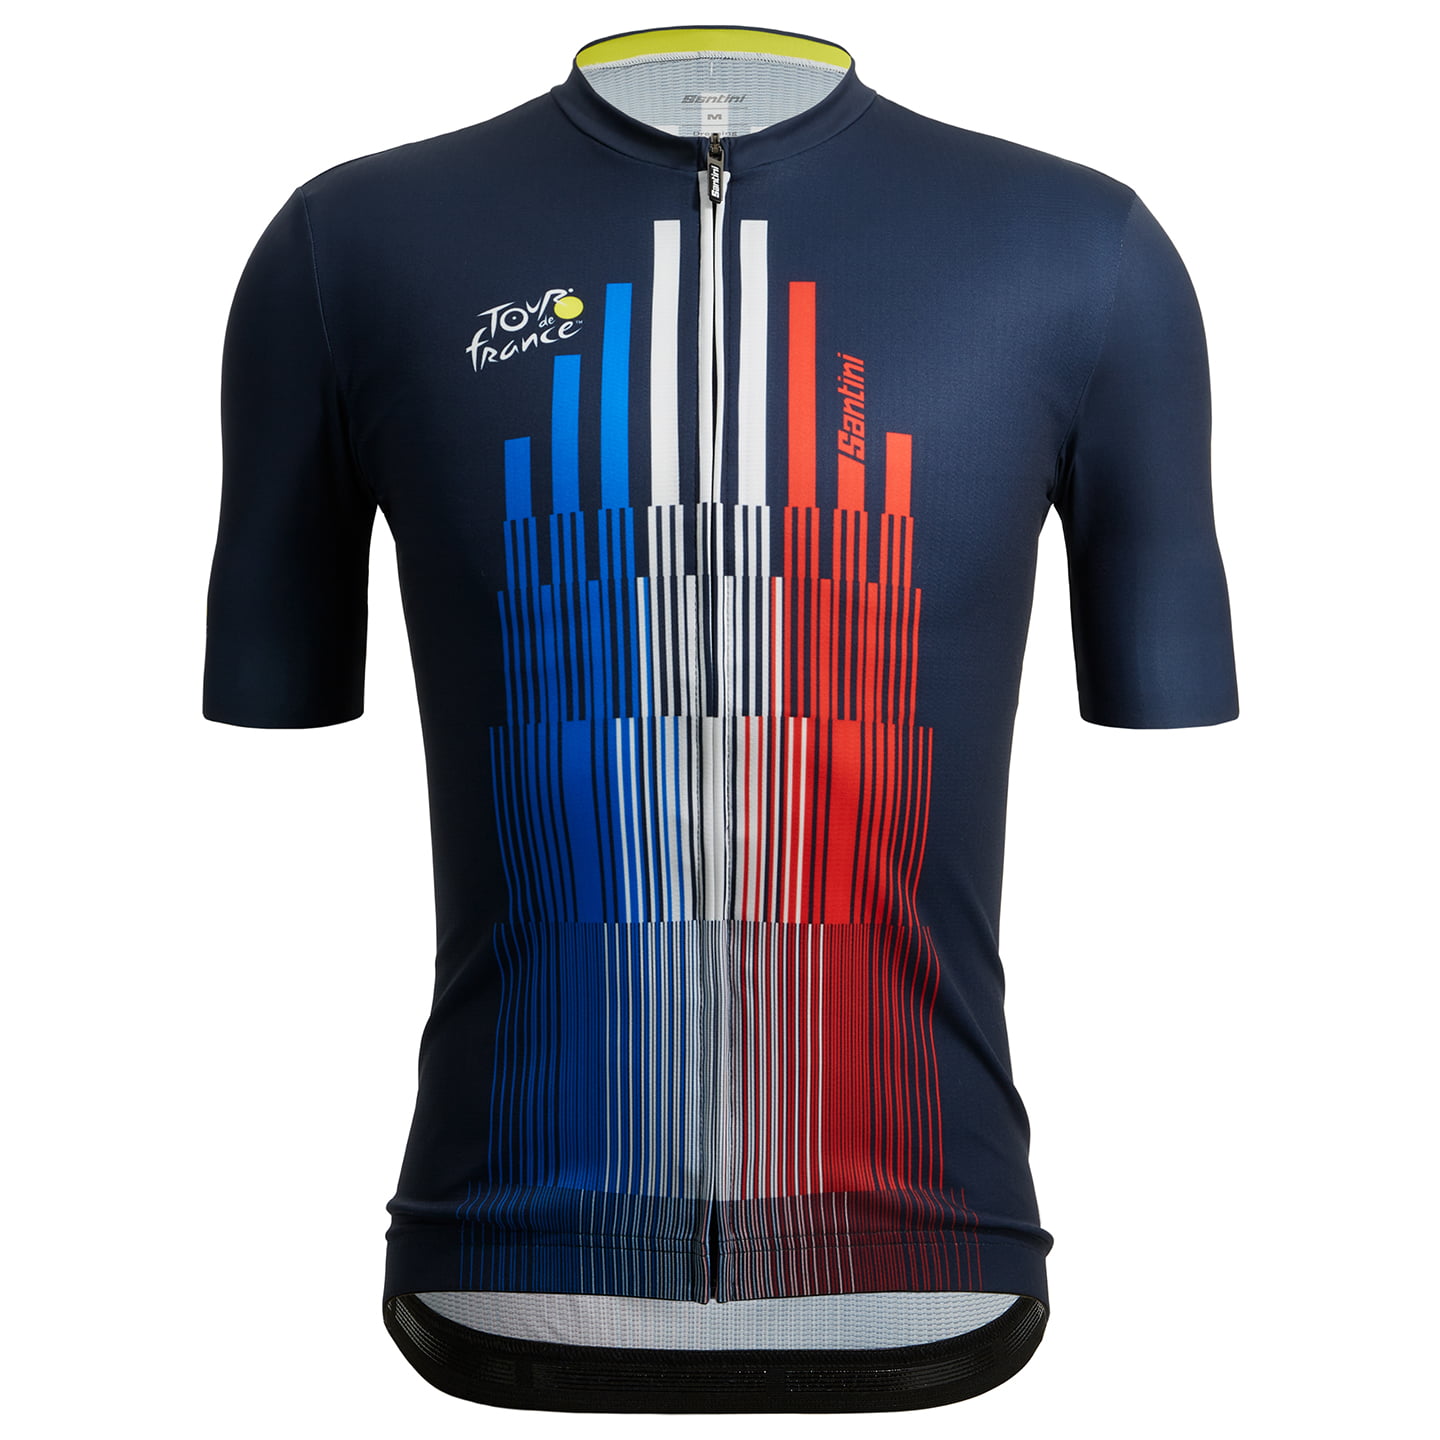 Tour de France Trionfo 2022 Short Sleeve Jersey, for men, size 3XL, Bike shirt, Cycling gear